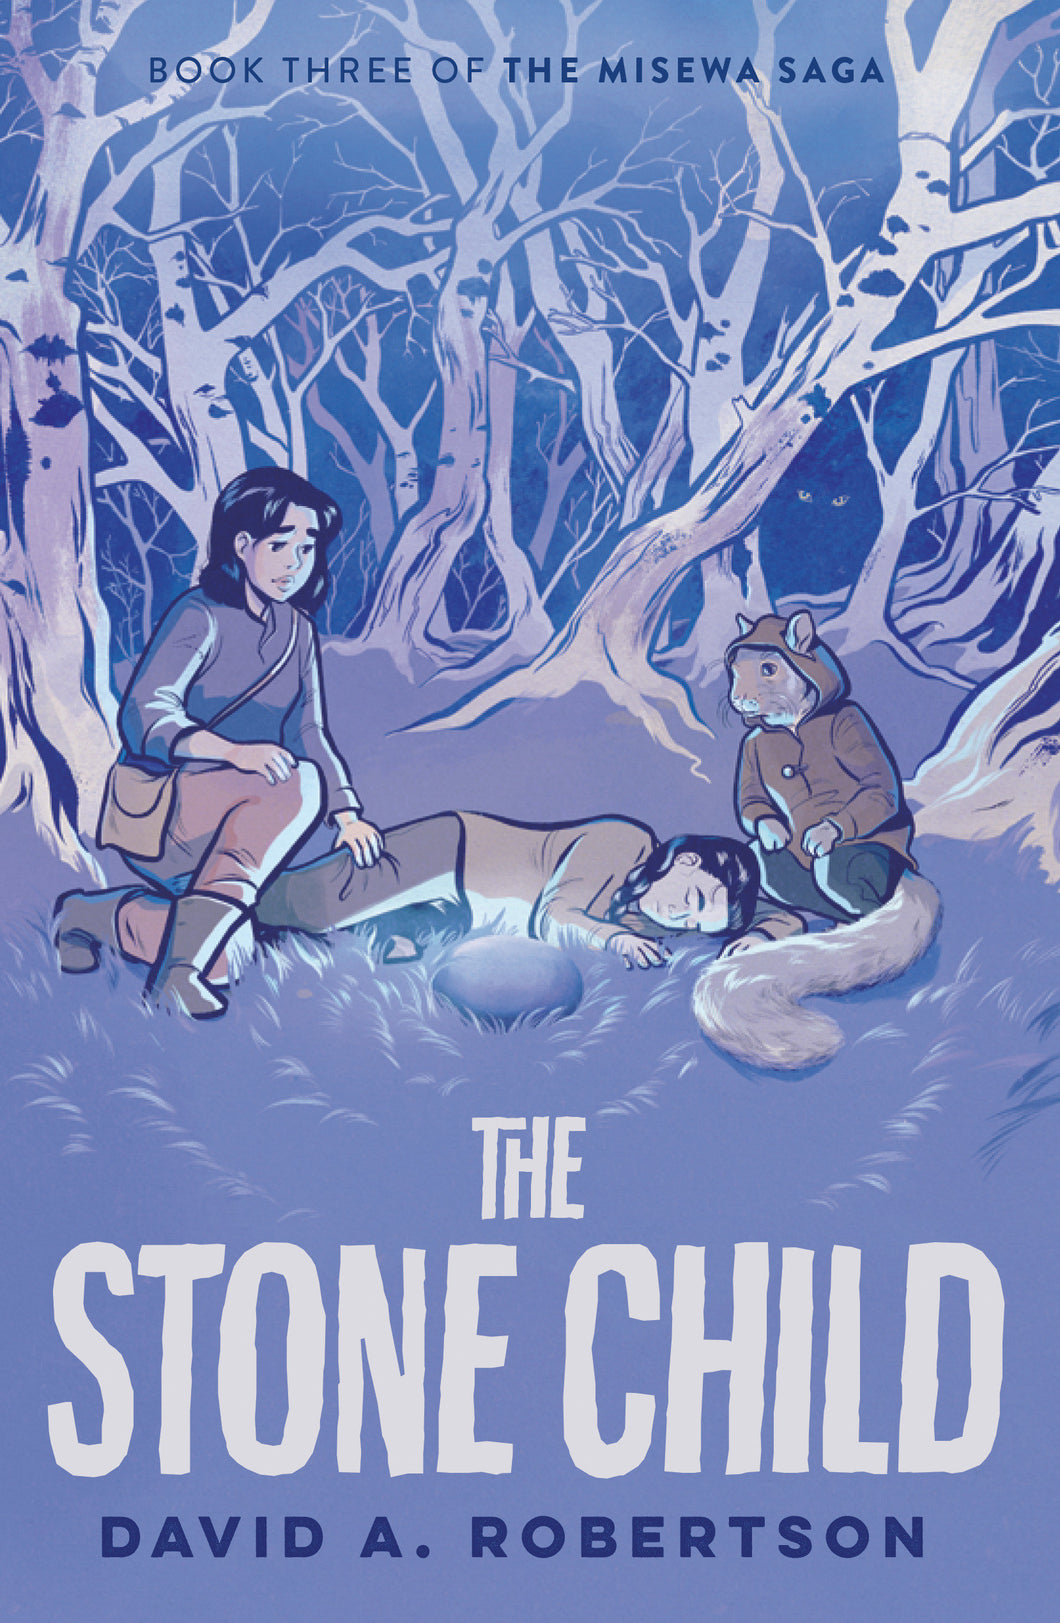 The Stone Child: The Misewa Saga, Book Three